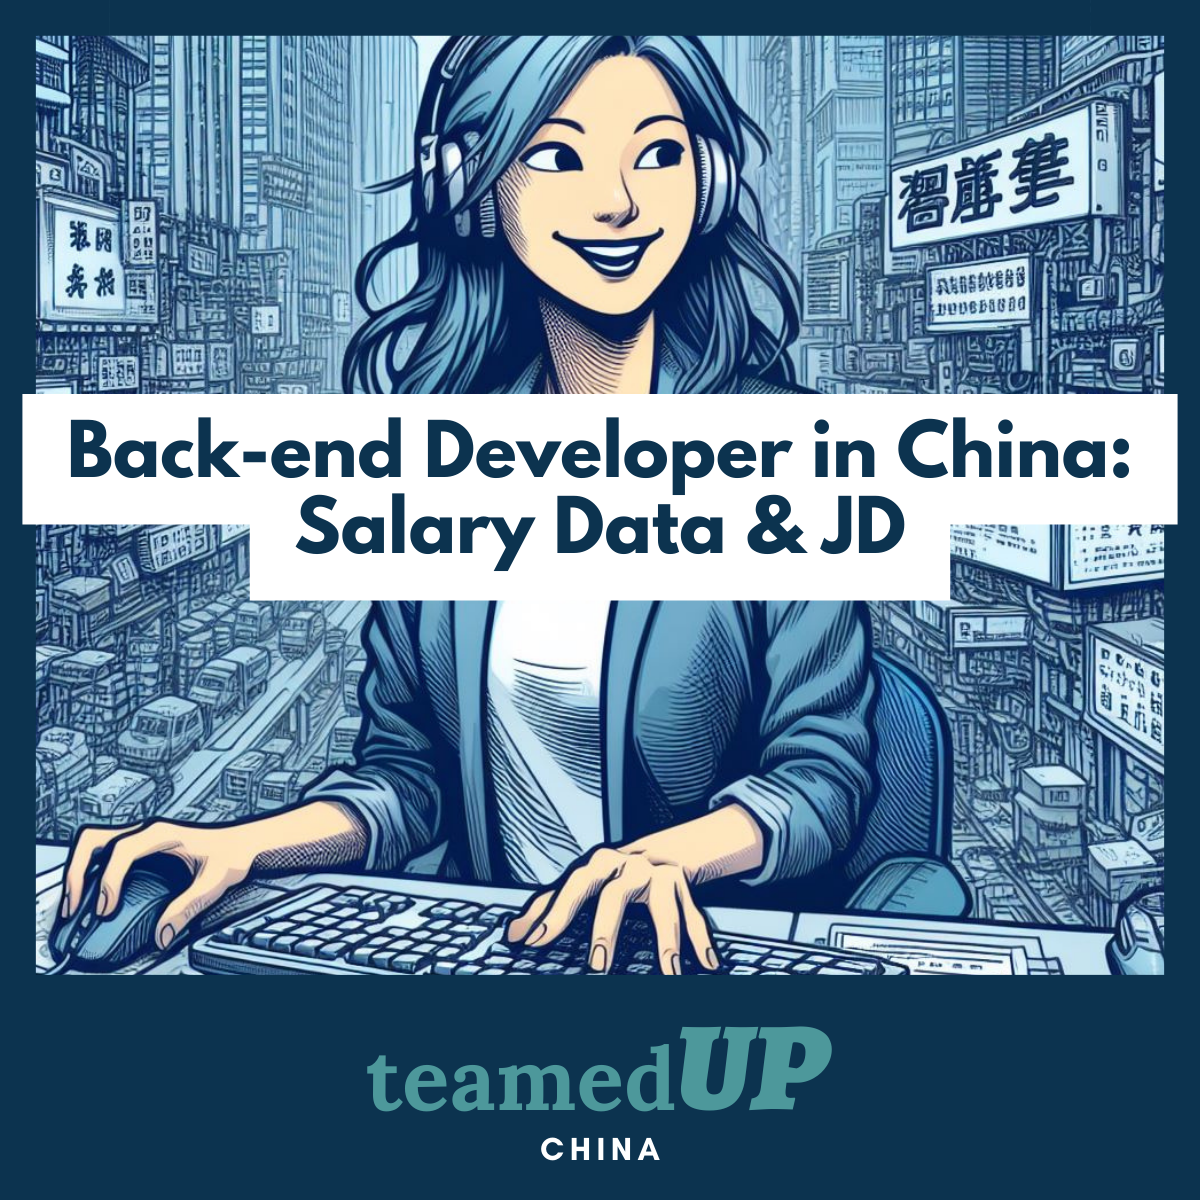 Back-end Developer in China Average Salary and JD - TeamedUp China